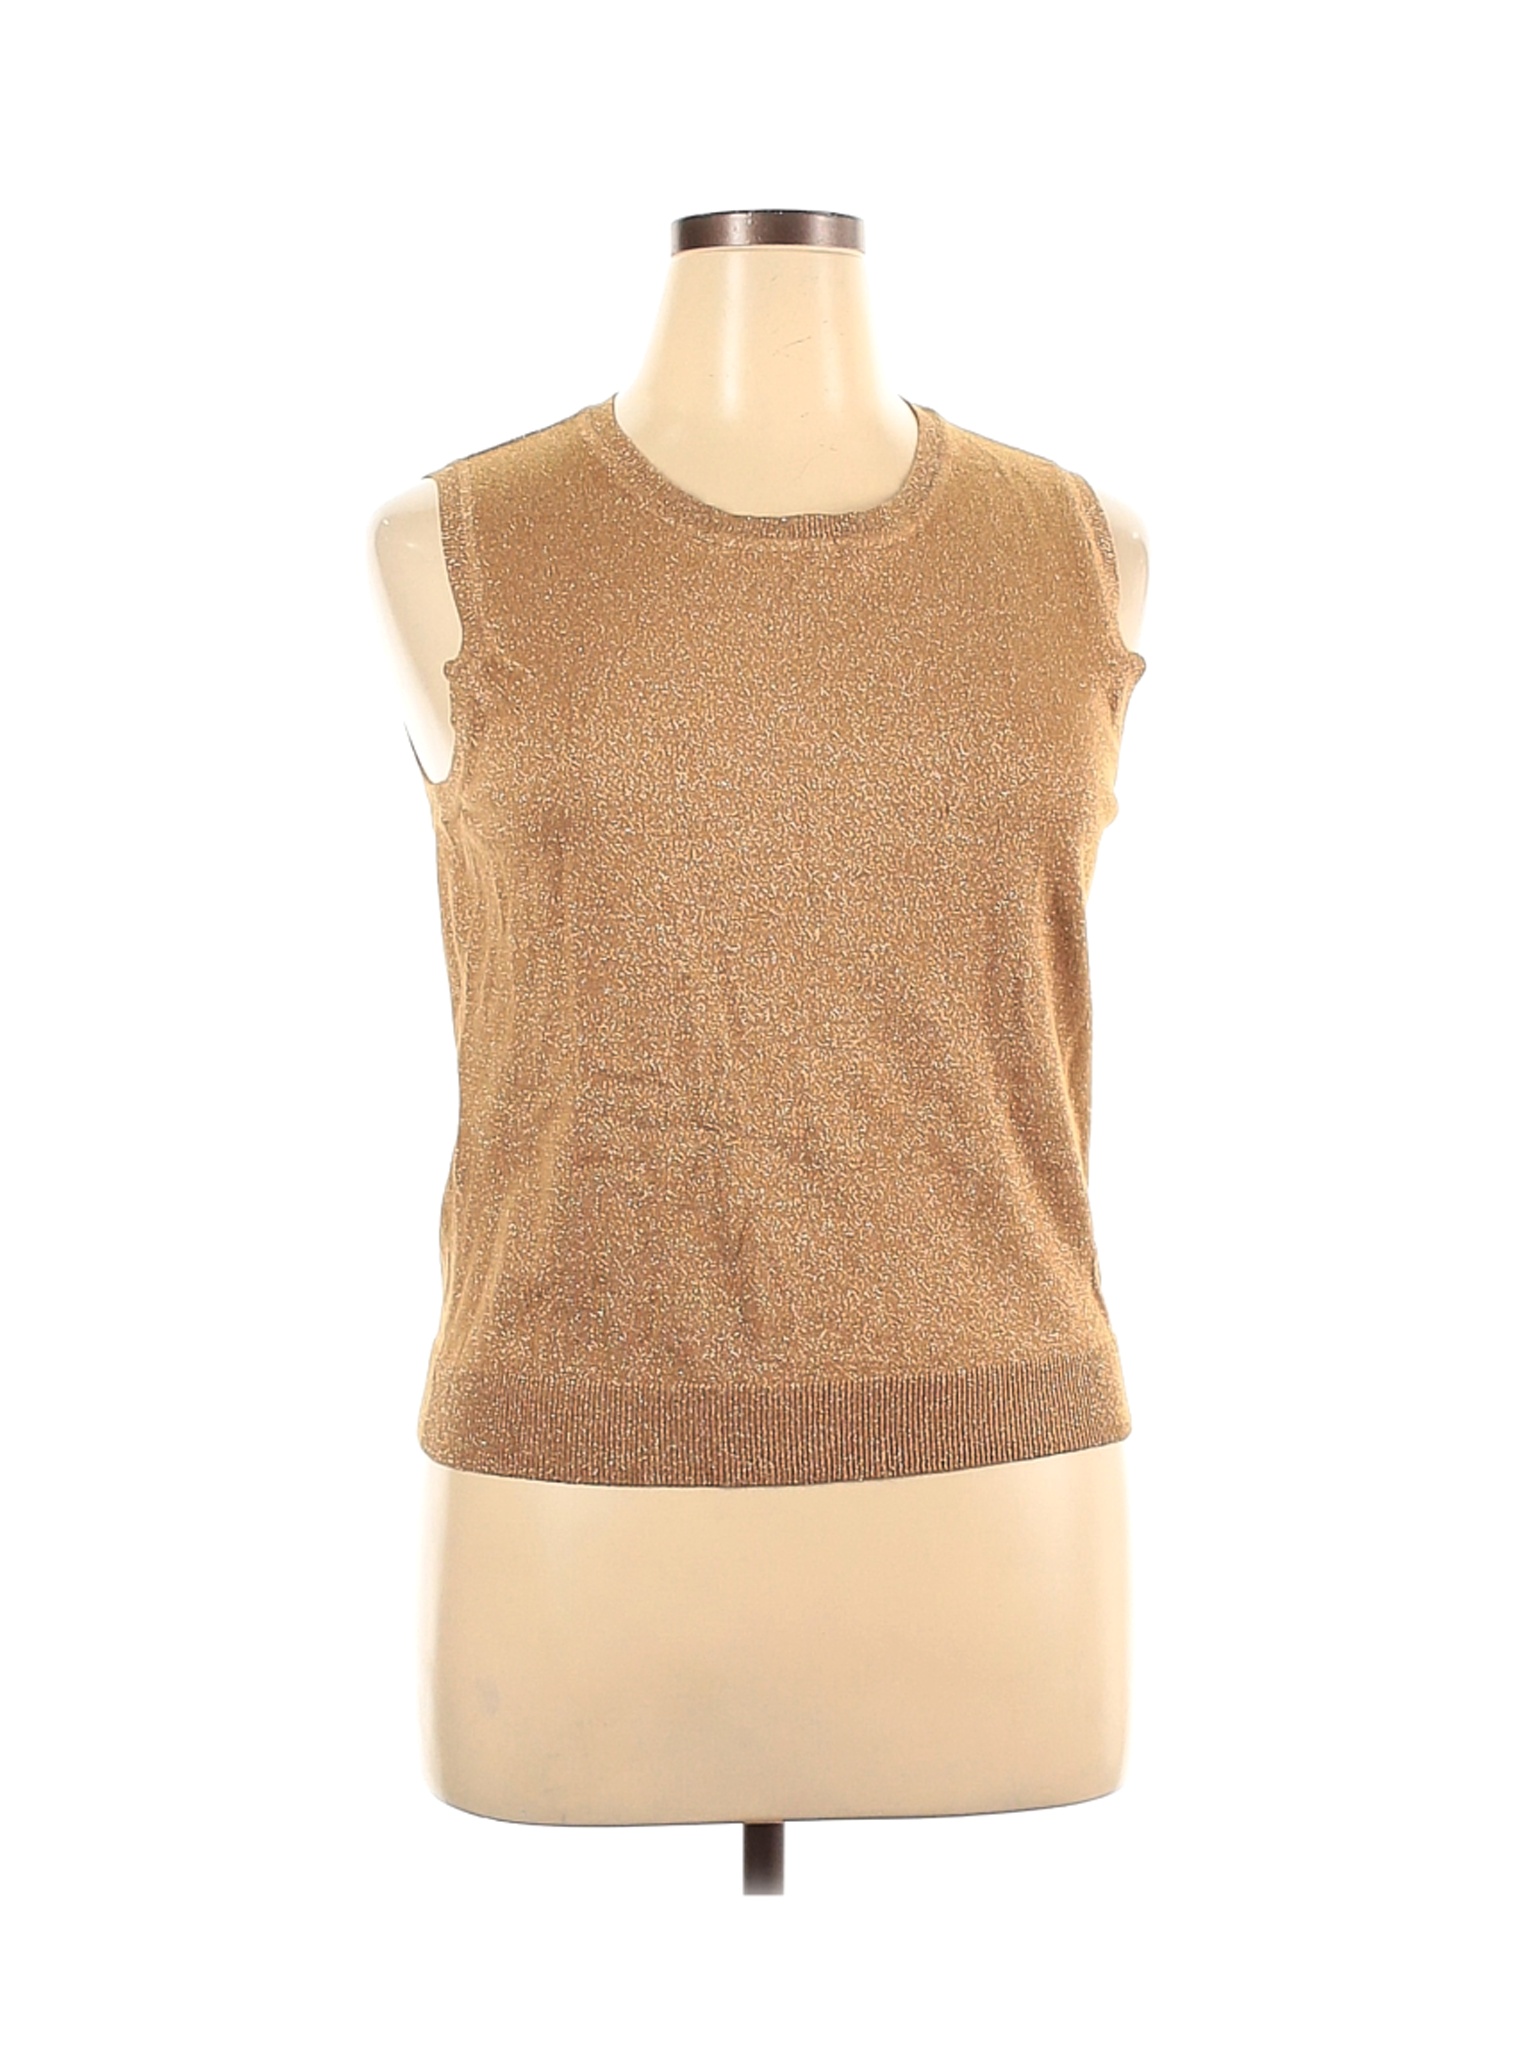 Charter Club Women Brown Sweater Vest XL | eBay